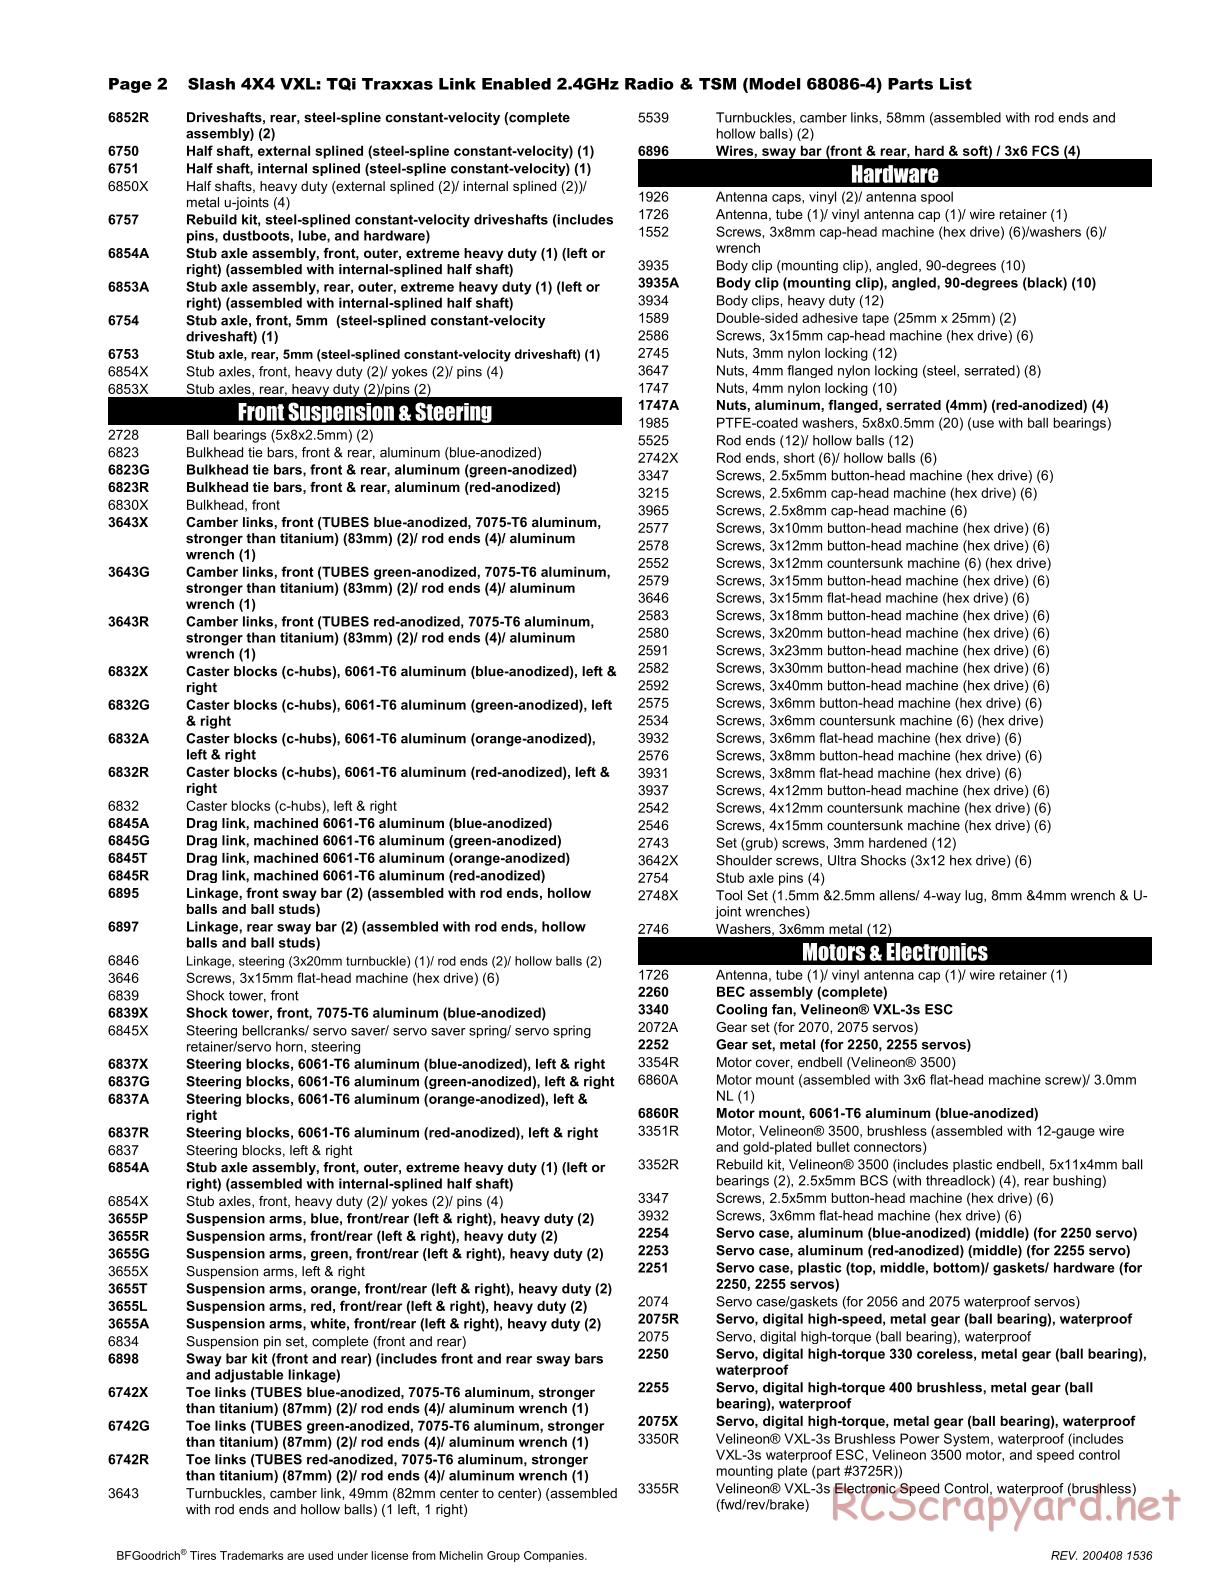 Traxxas - Slash 4x4 VXL - Parts List - Page 2